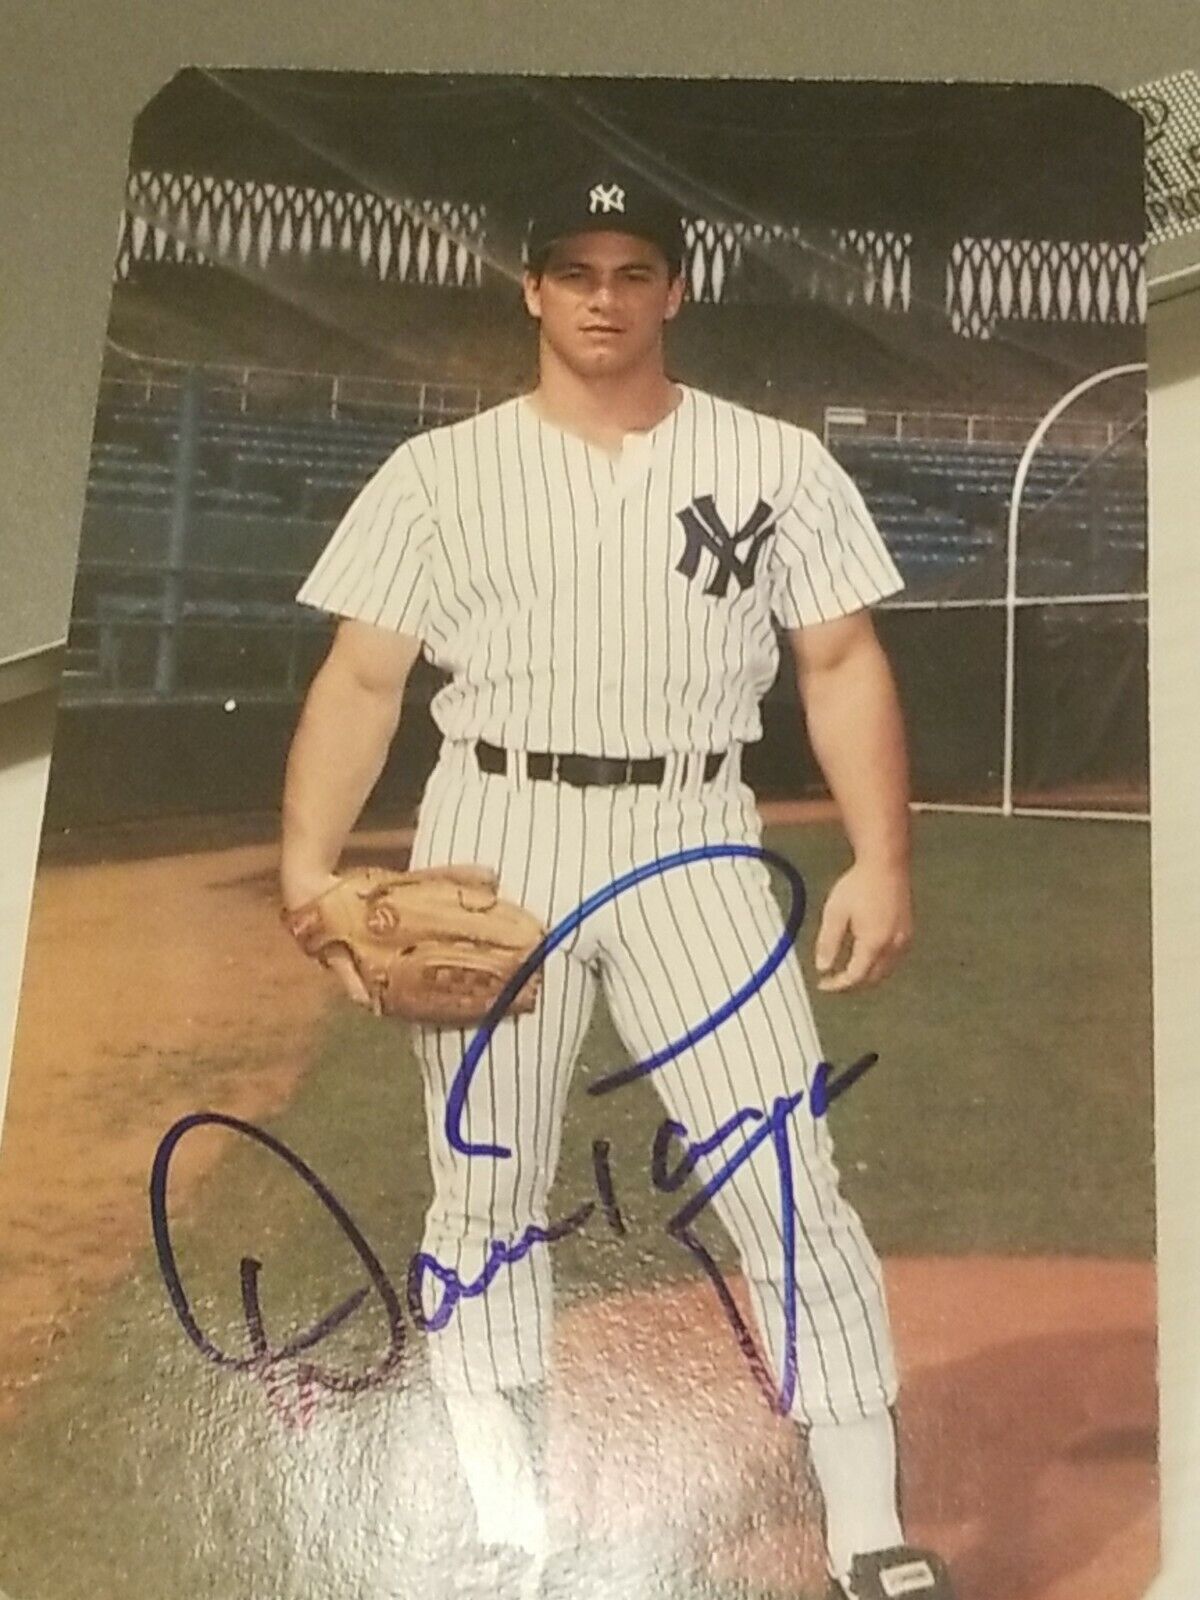 Dan pasqua signed 3.5x5 postcard autographed picture photo ny Yankees